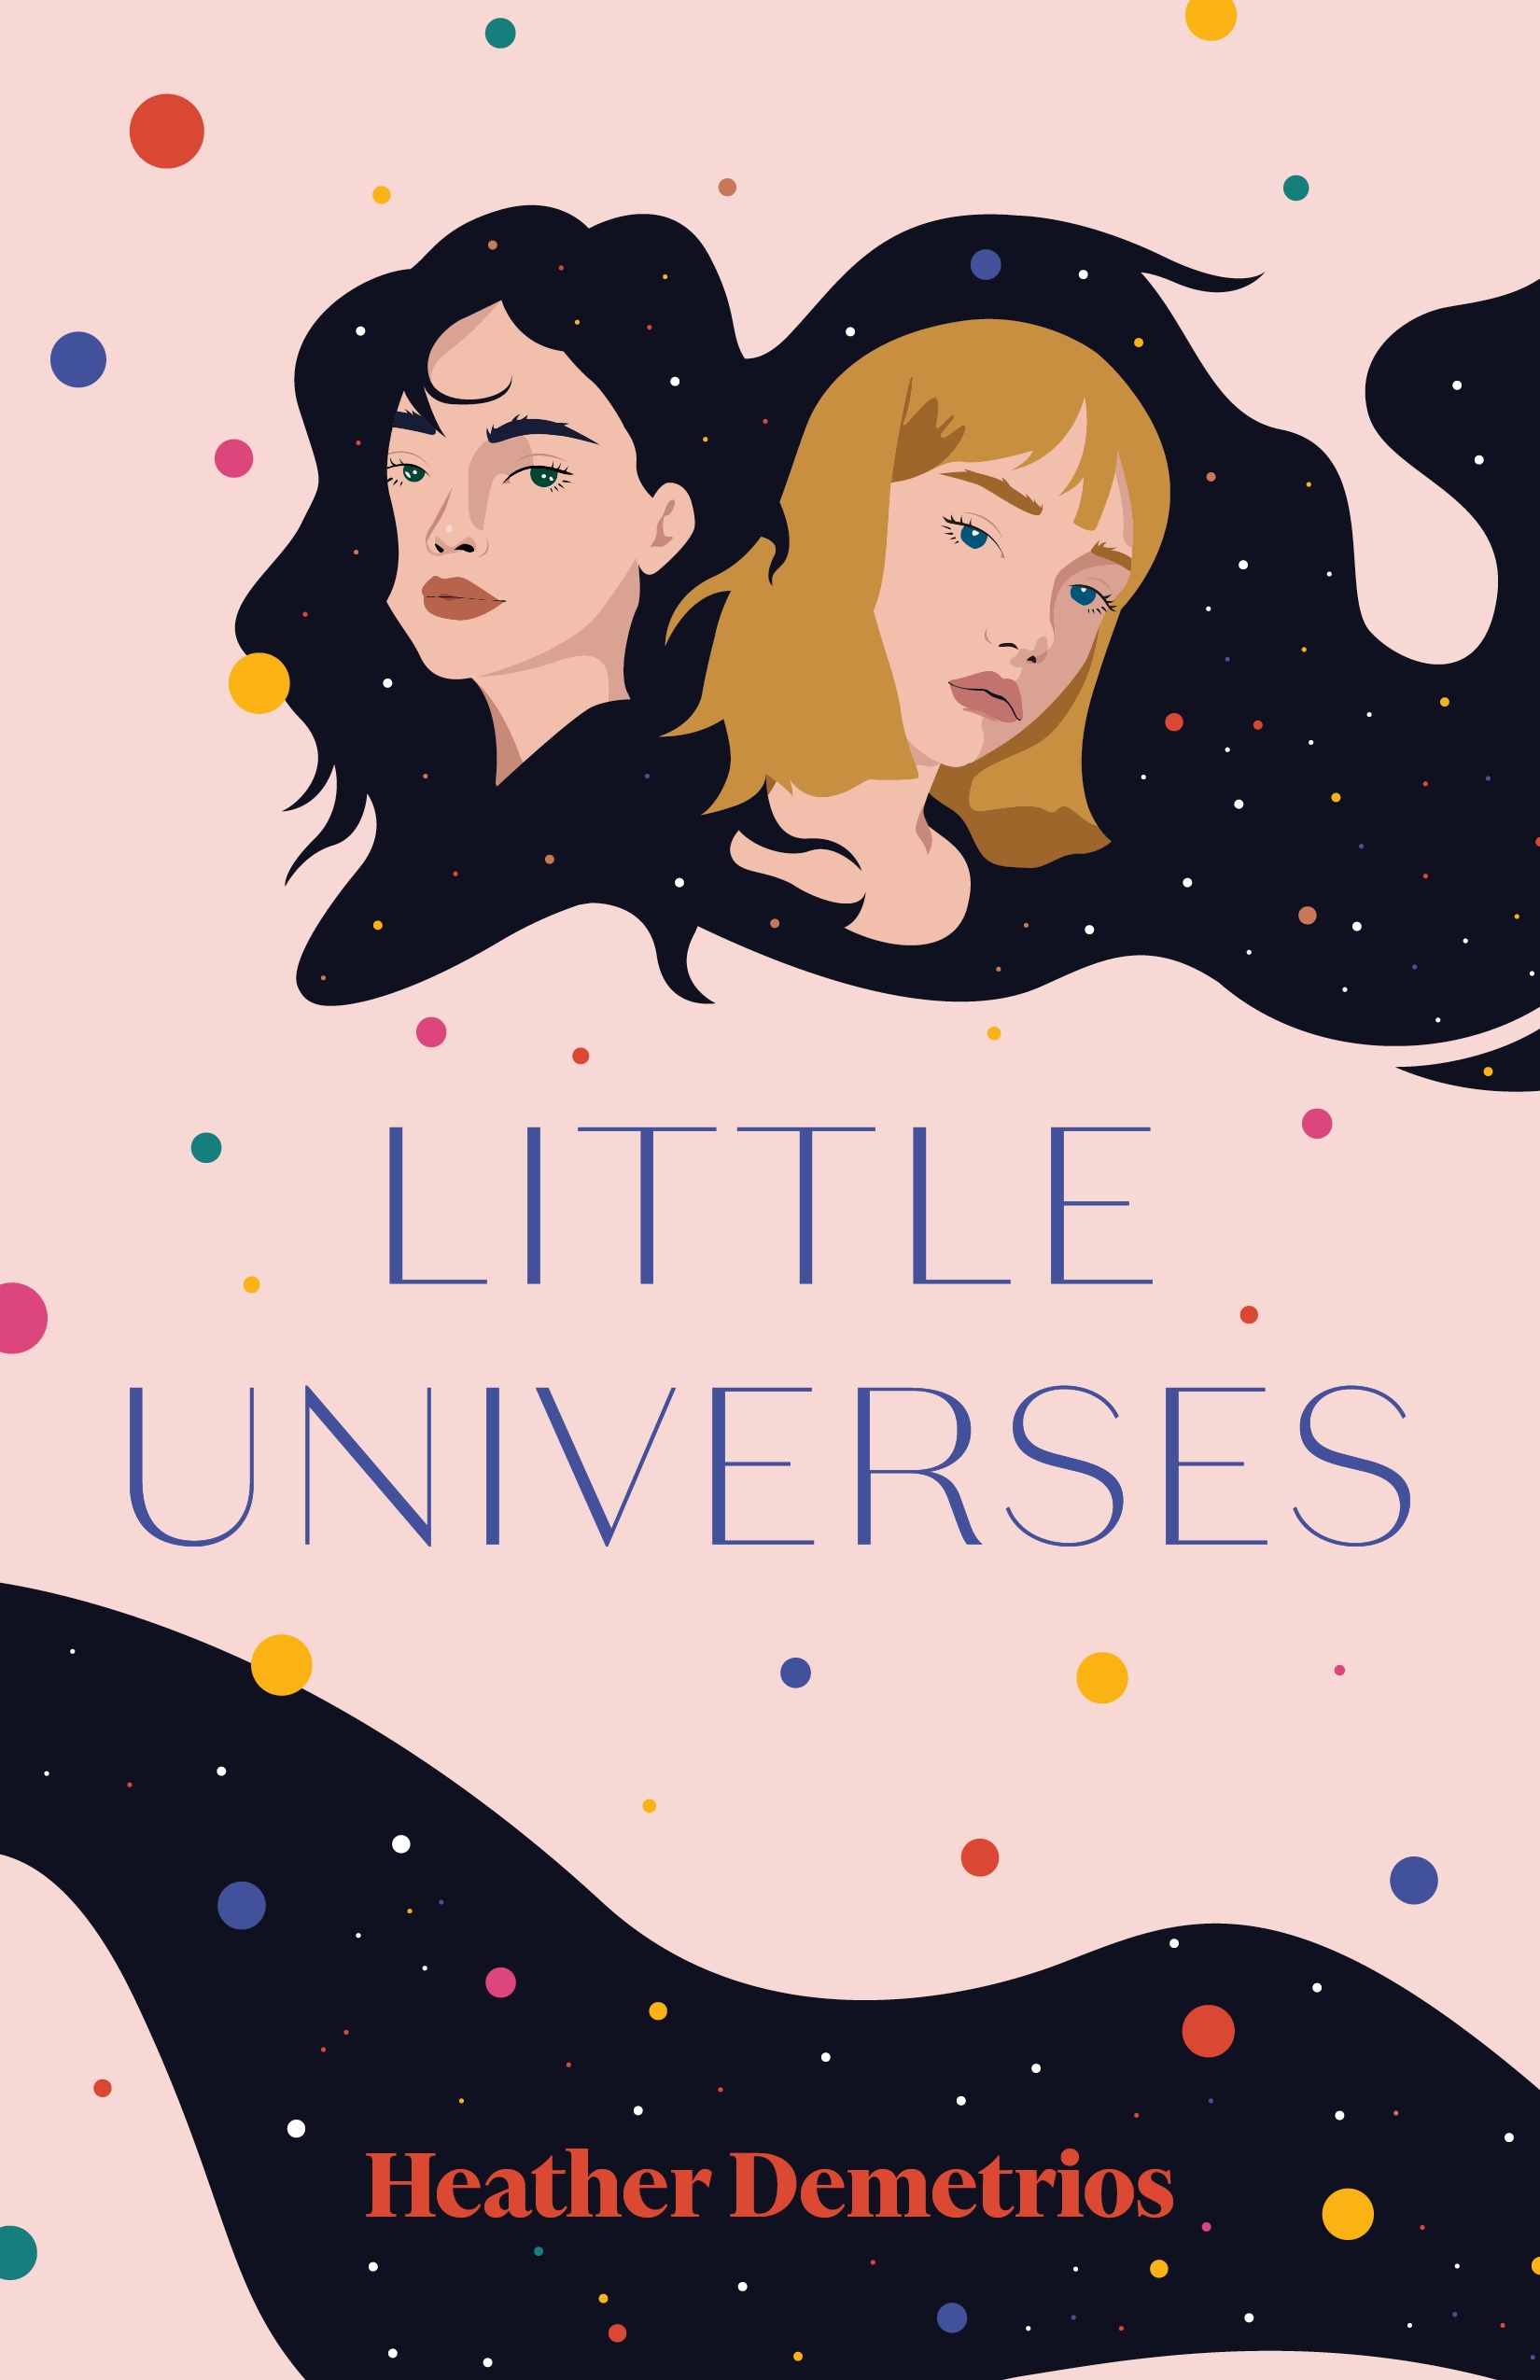 Book “Little Universes” by Heather Demetrios — April 7, 2020